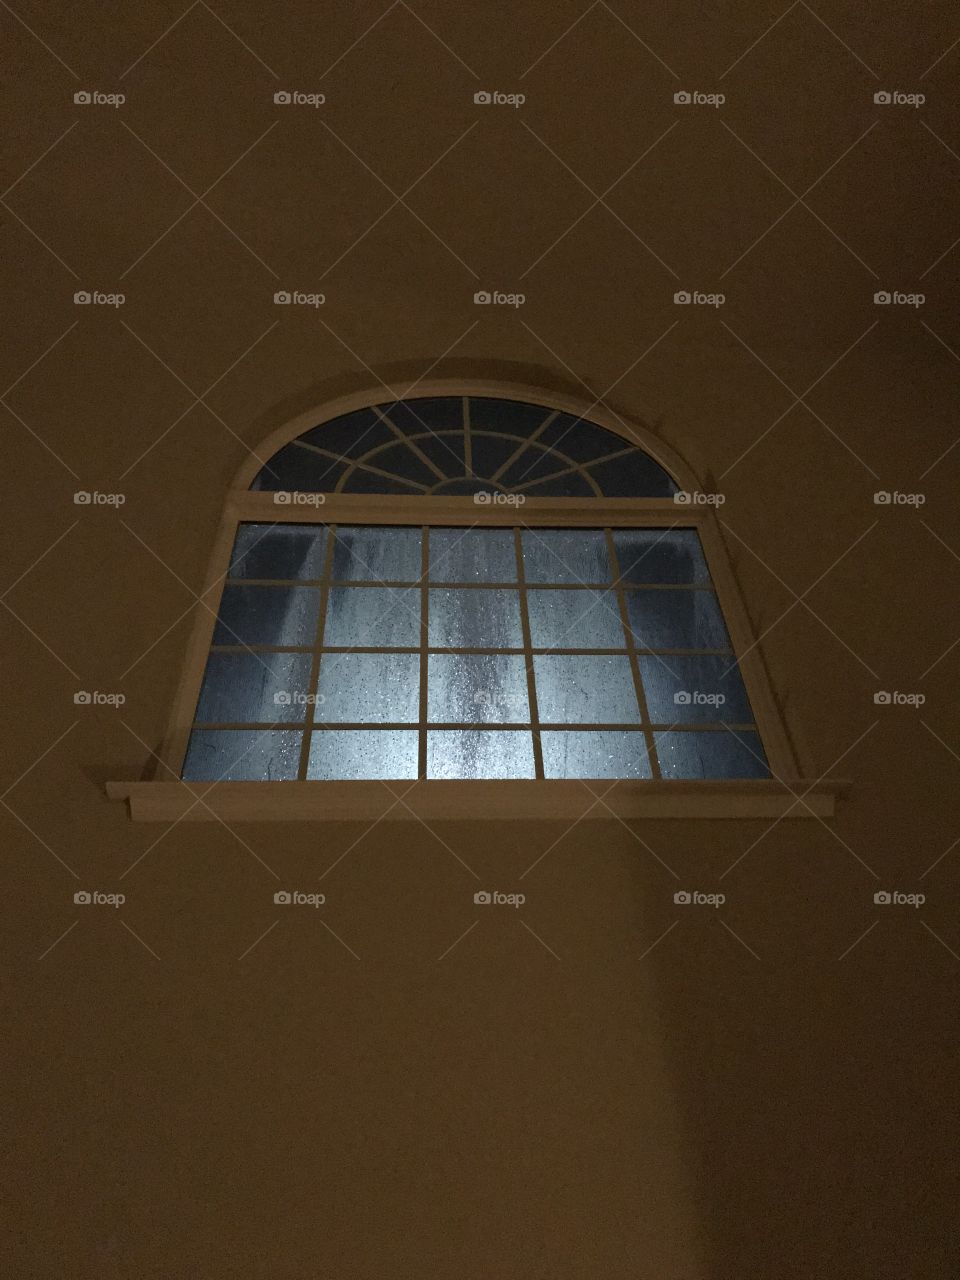 window 